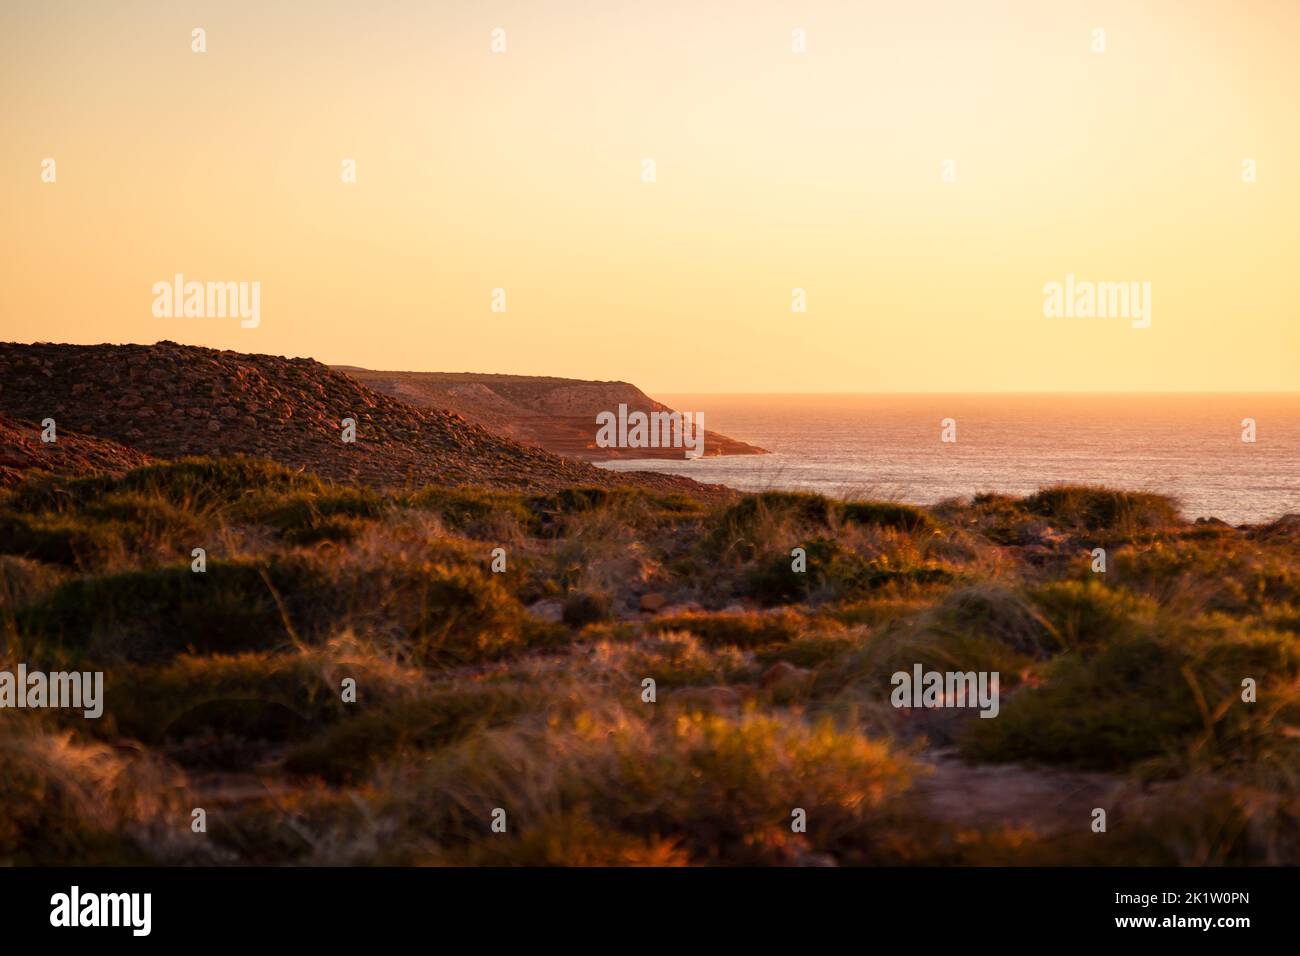 Warm sunset at the coast of Western Australia Stock Photo